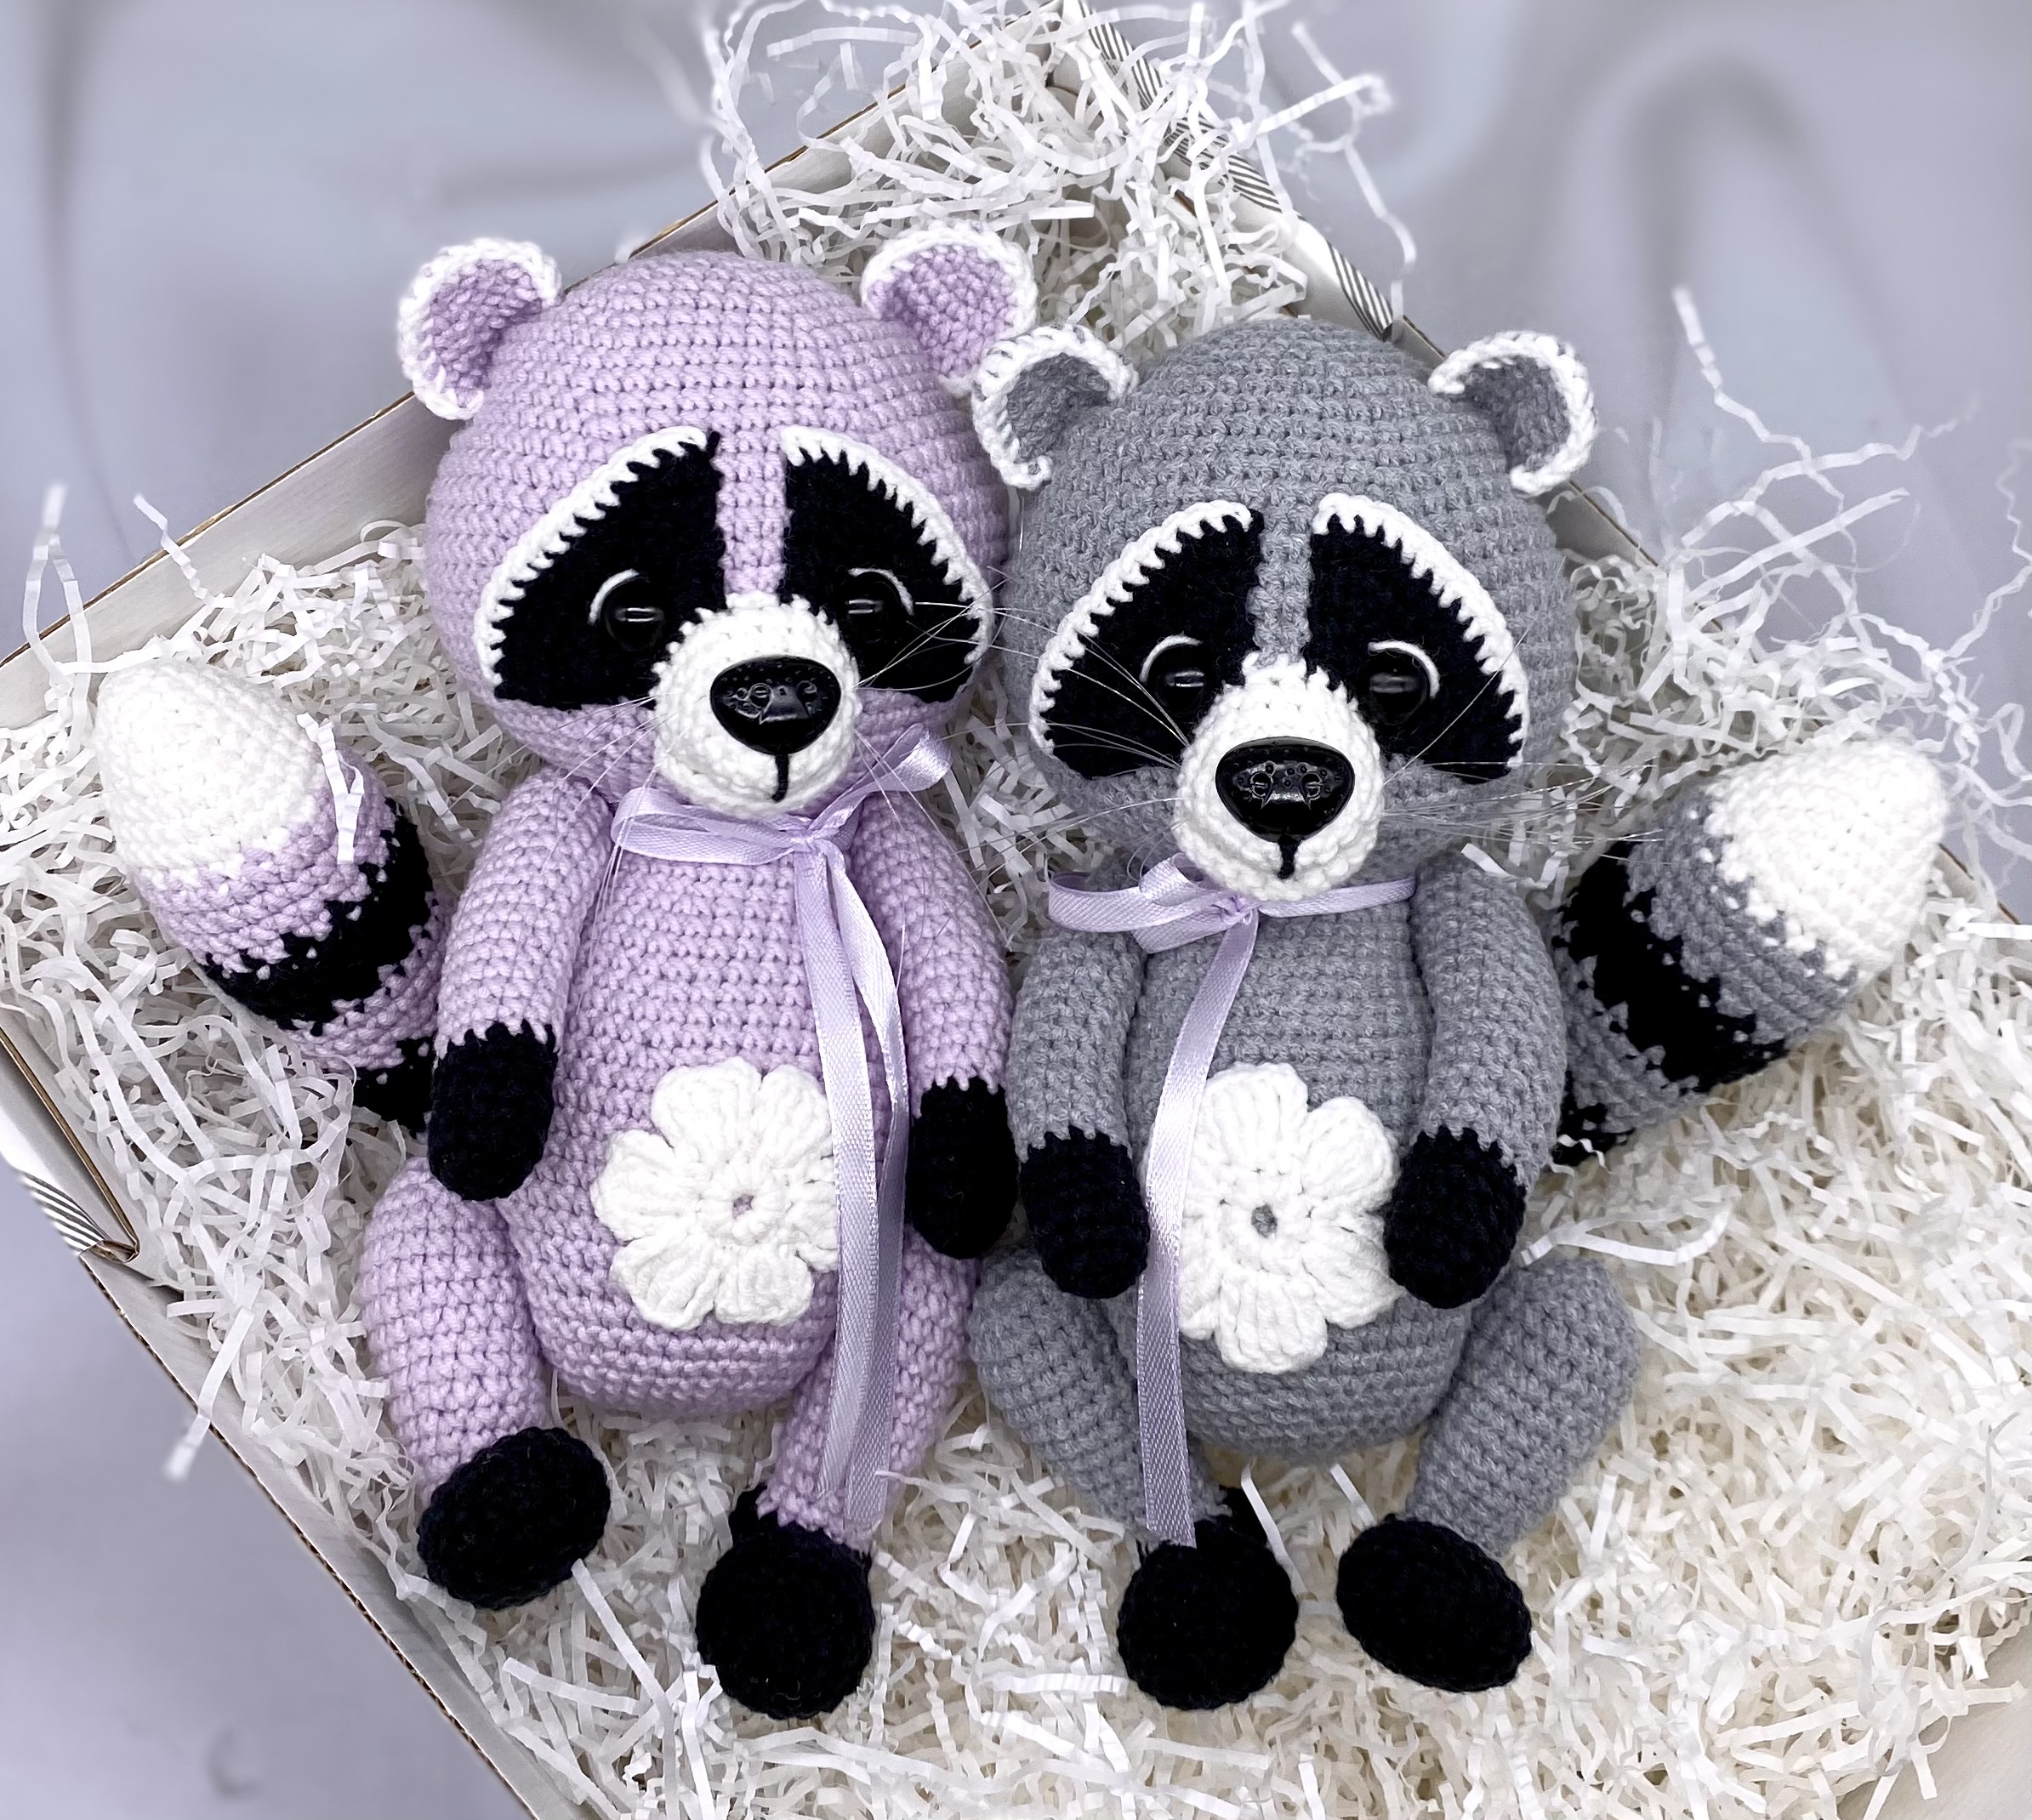 8 Crochet Stuffed Animal Patterns – Crochet